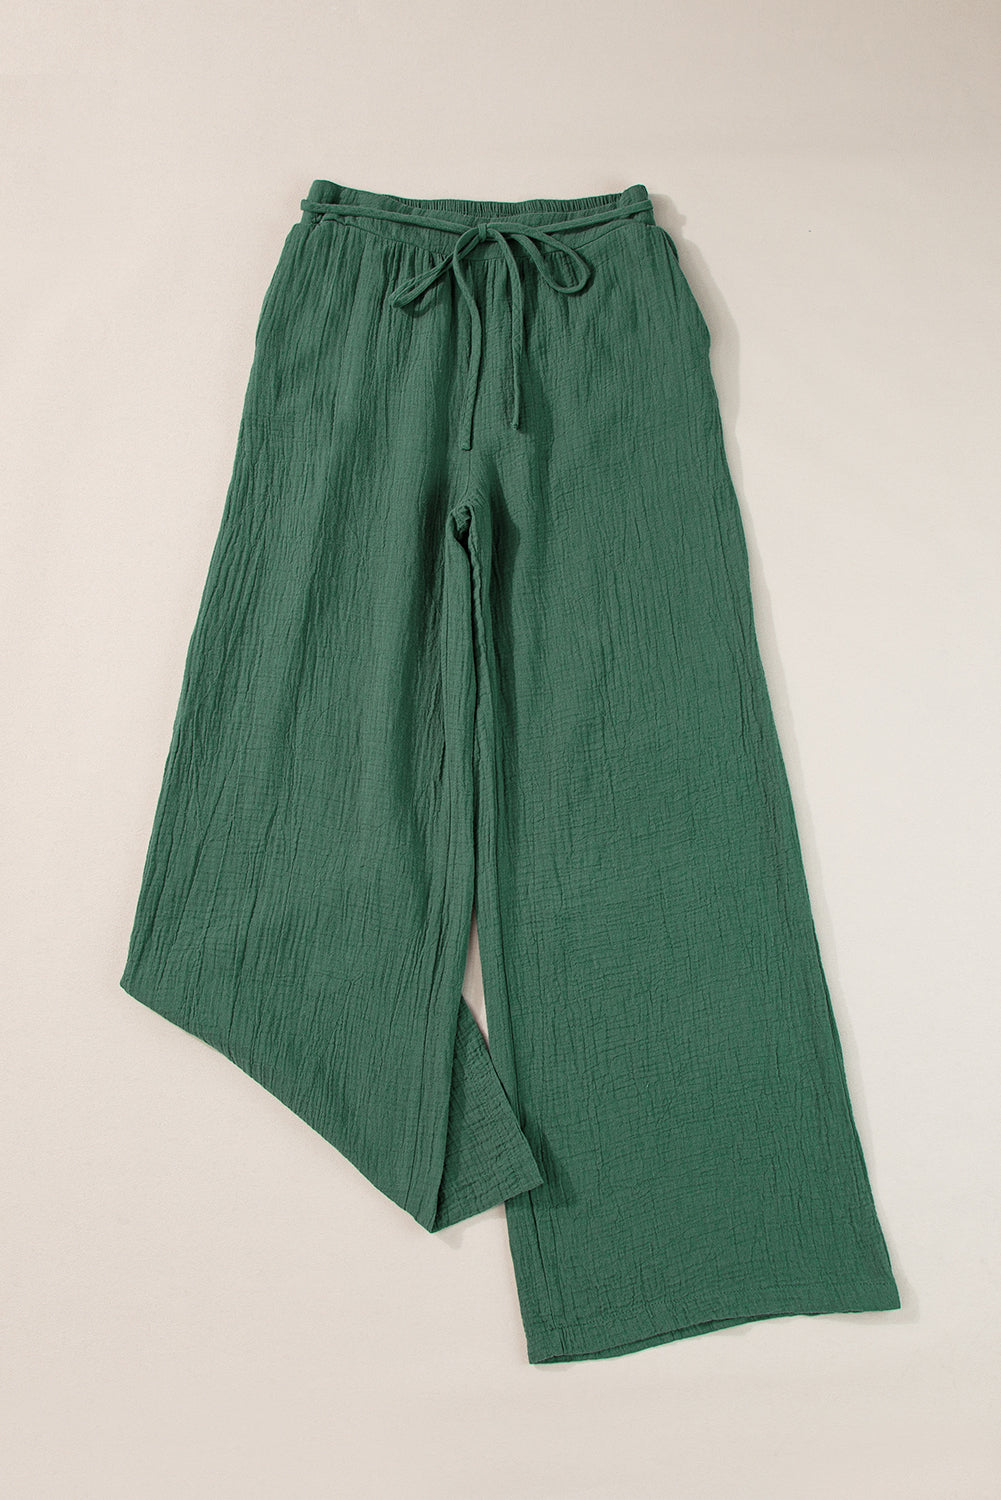 Mint Green Drawstring Wide Leg 100% Cotton Womens Pants